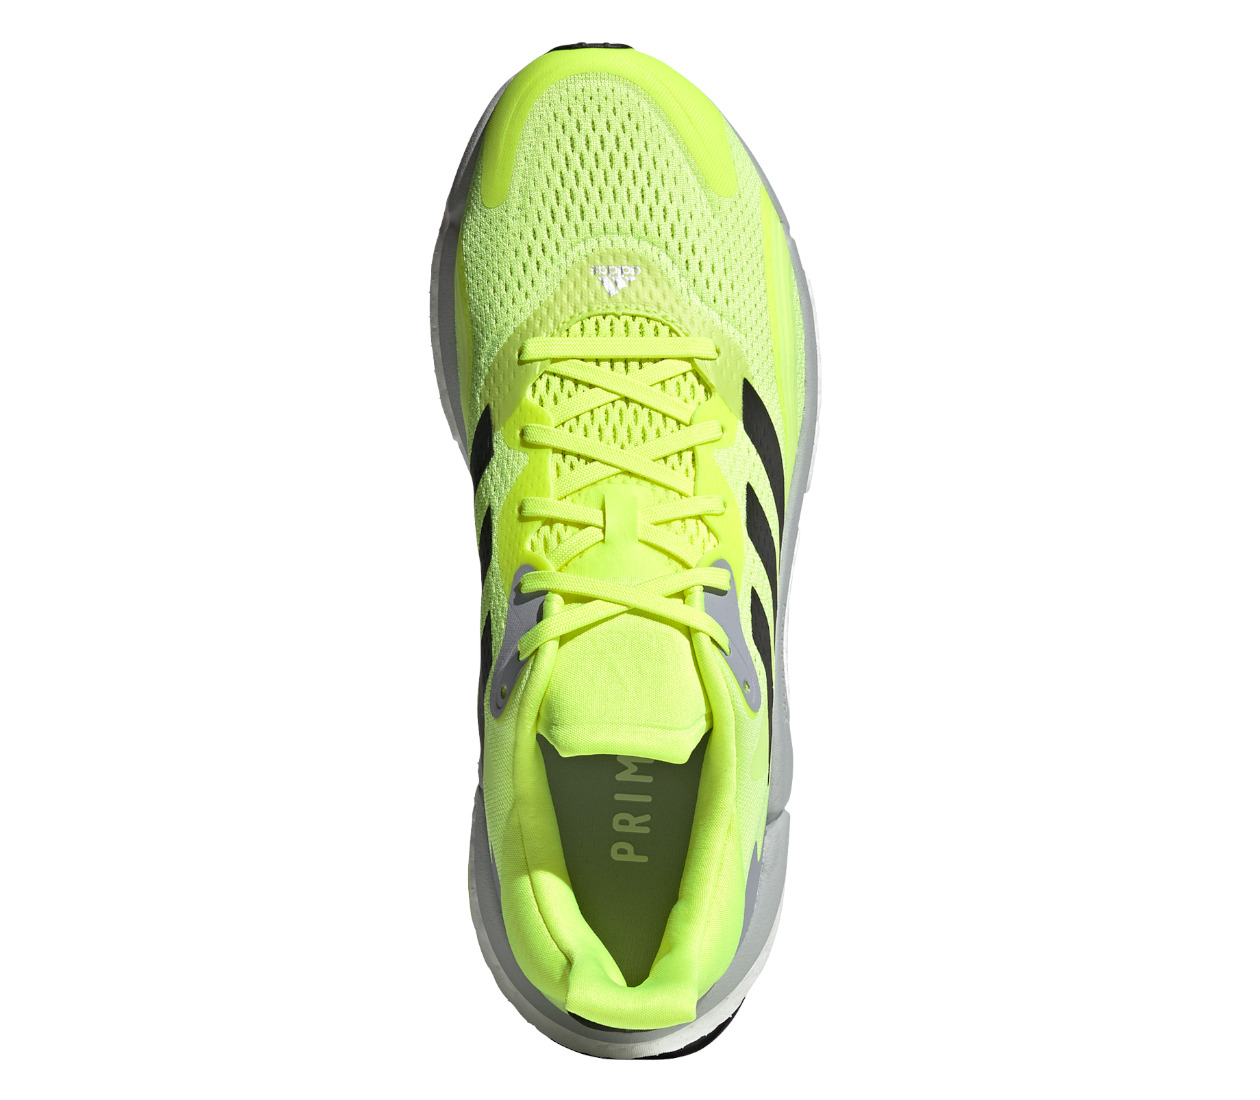 Adidas Solar Boost 3 (M) lunghe distanze | LBM Sport